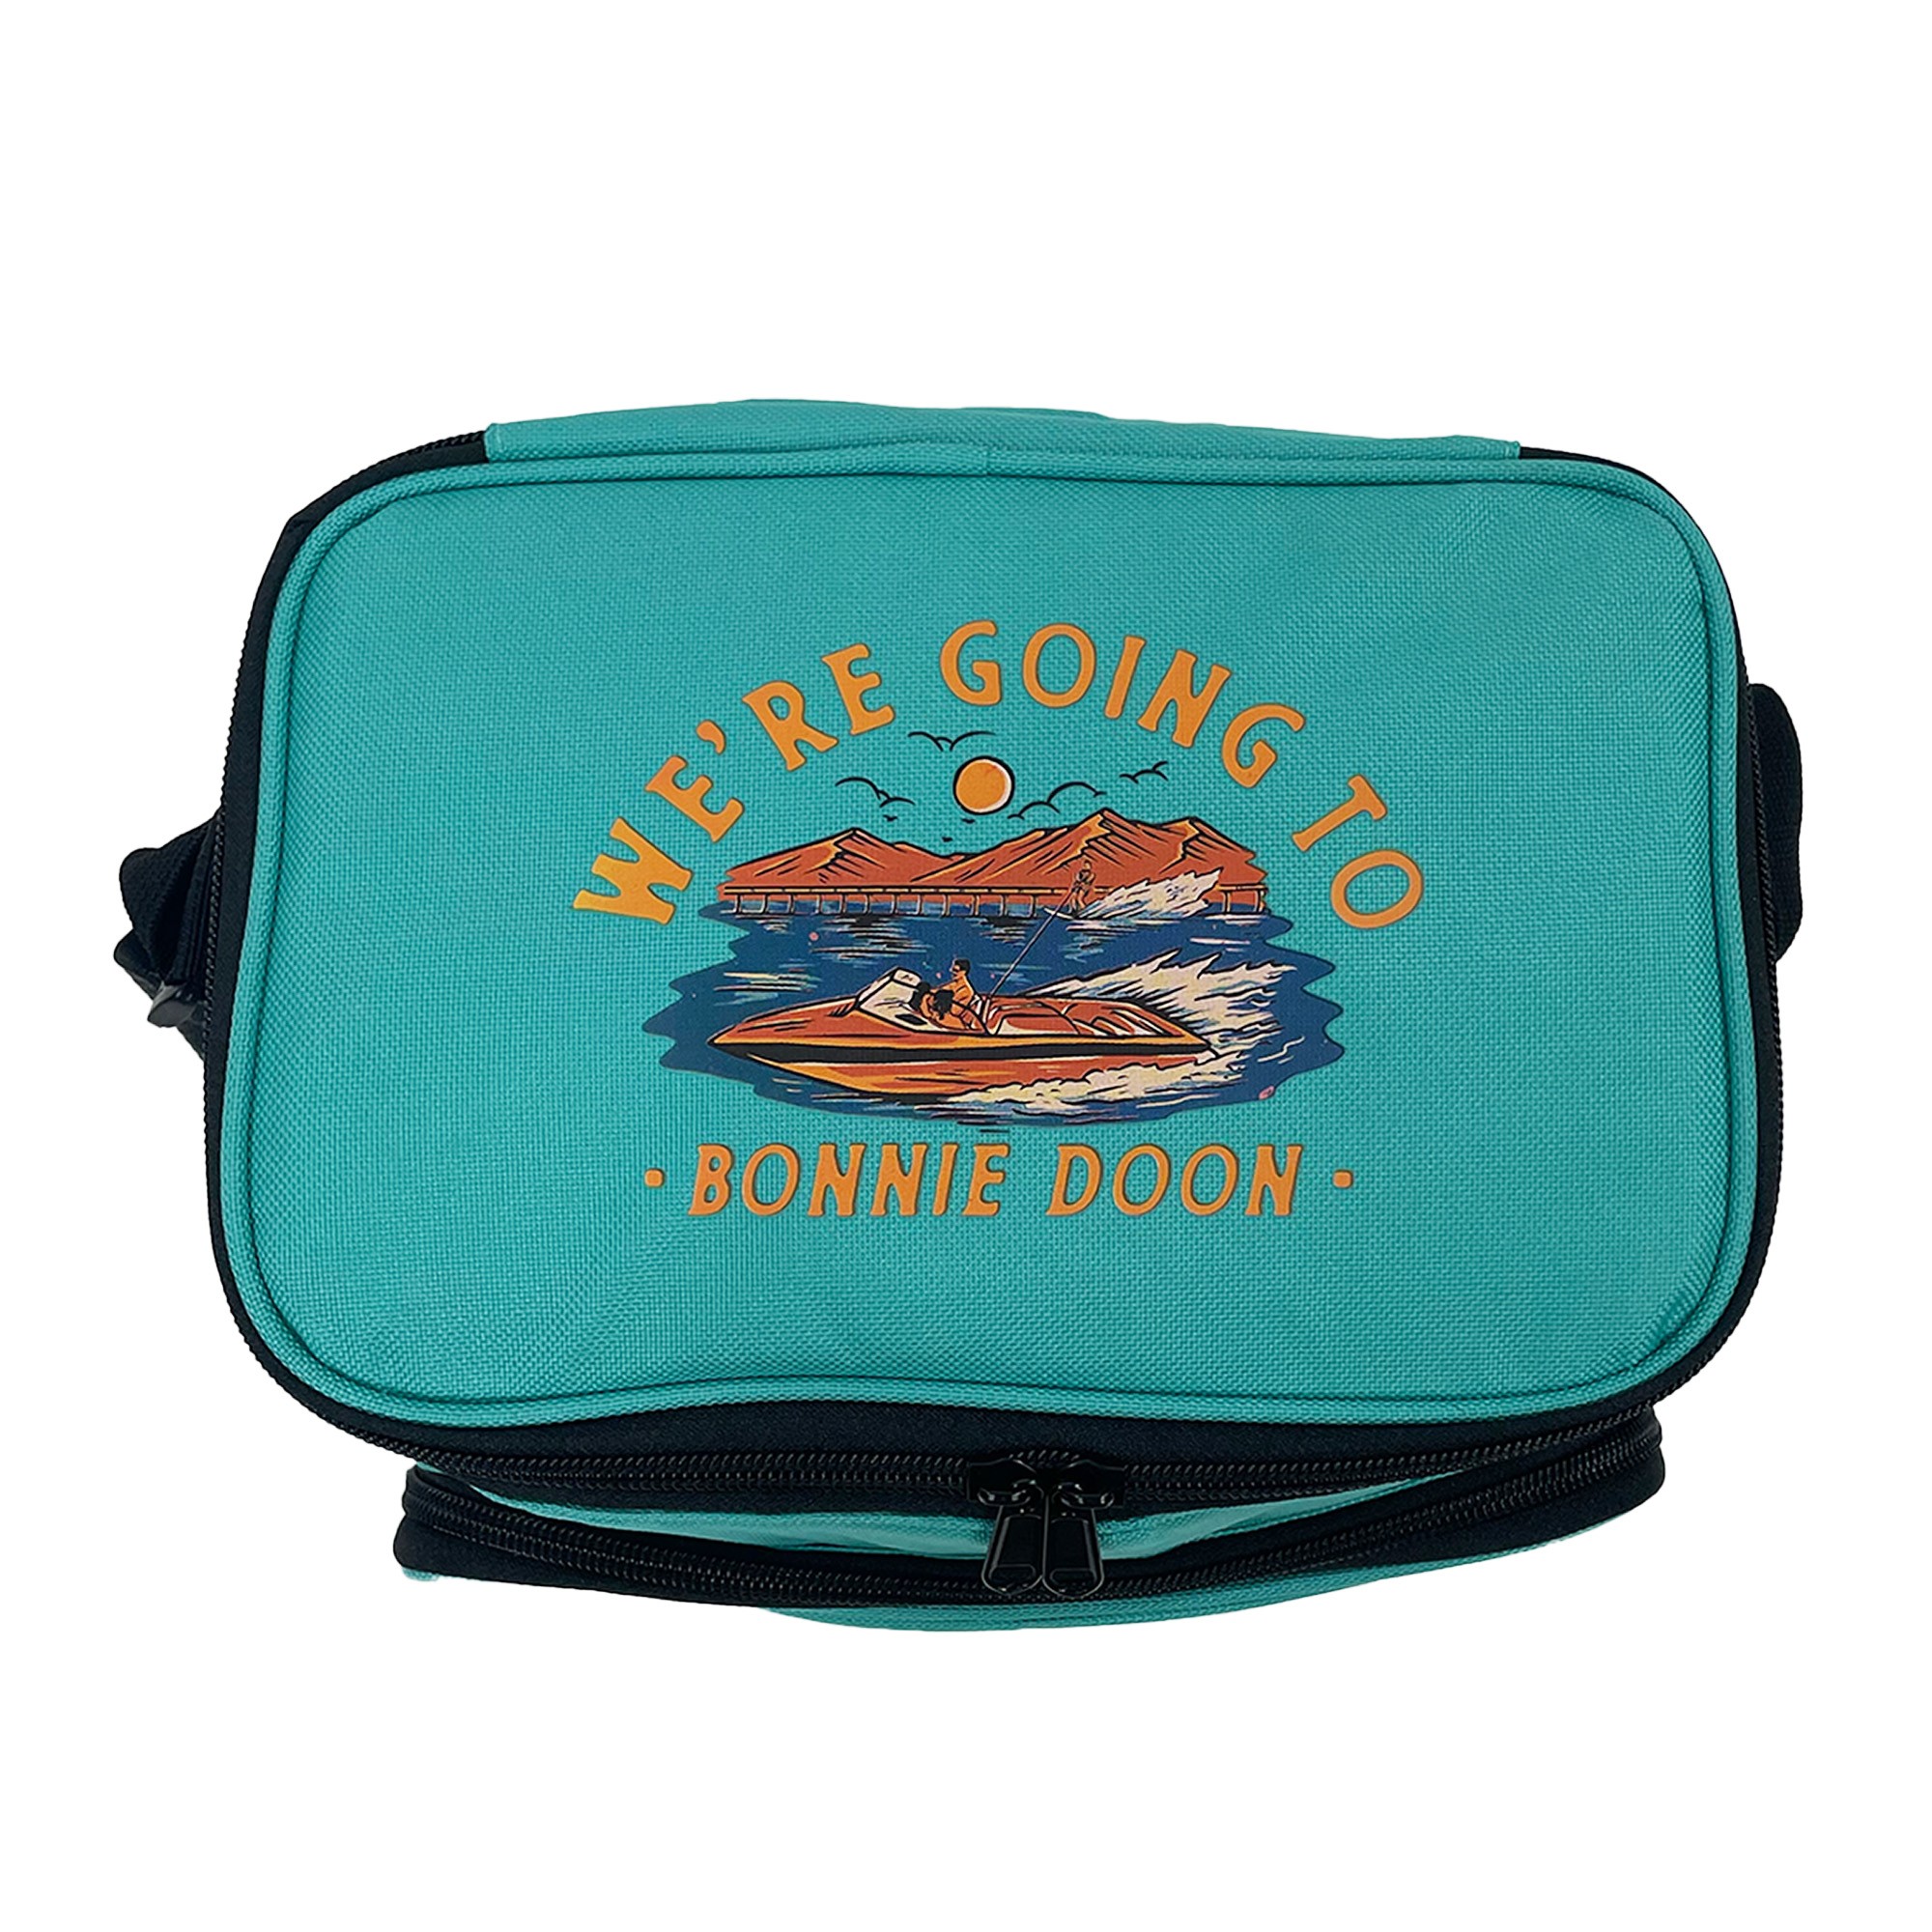 BONNIE DOON COOLER BAG